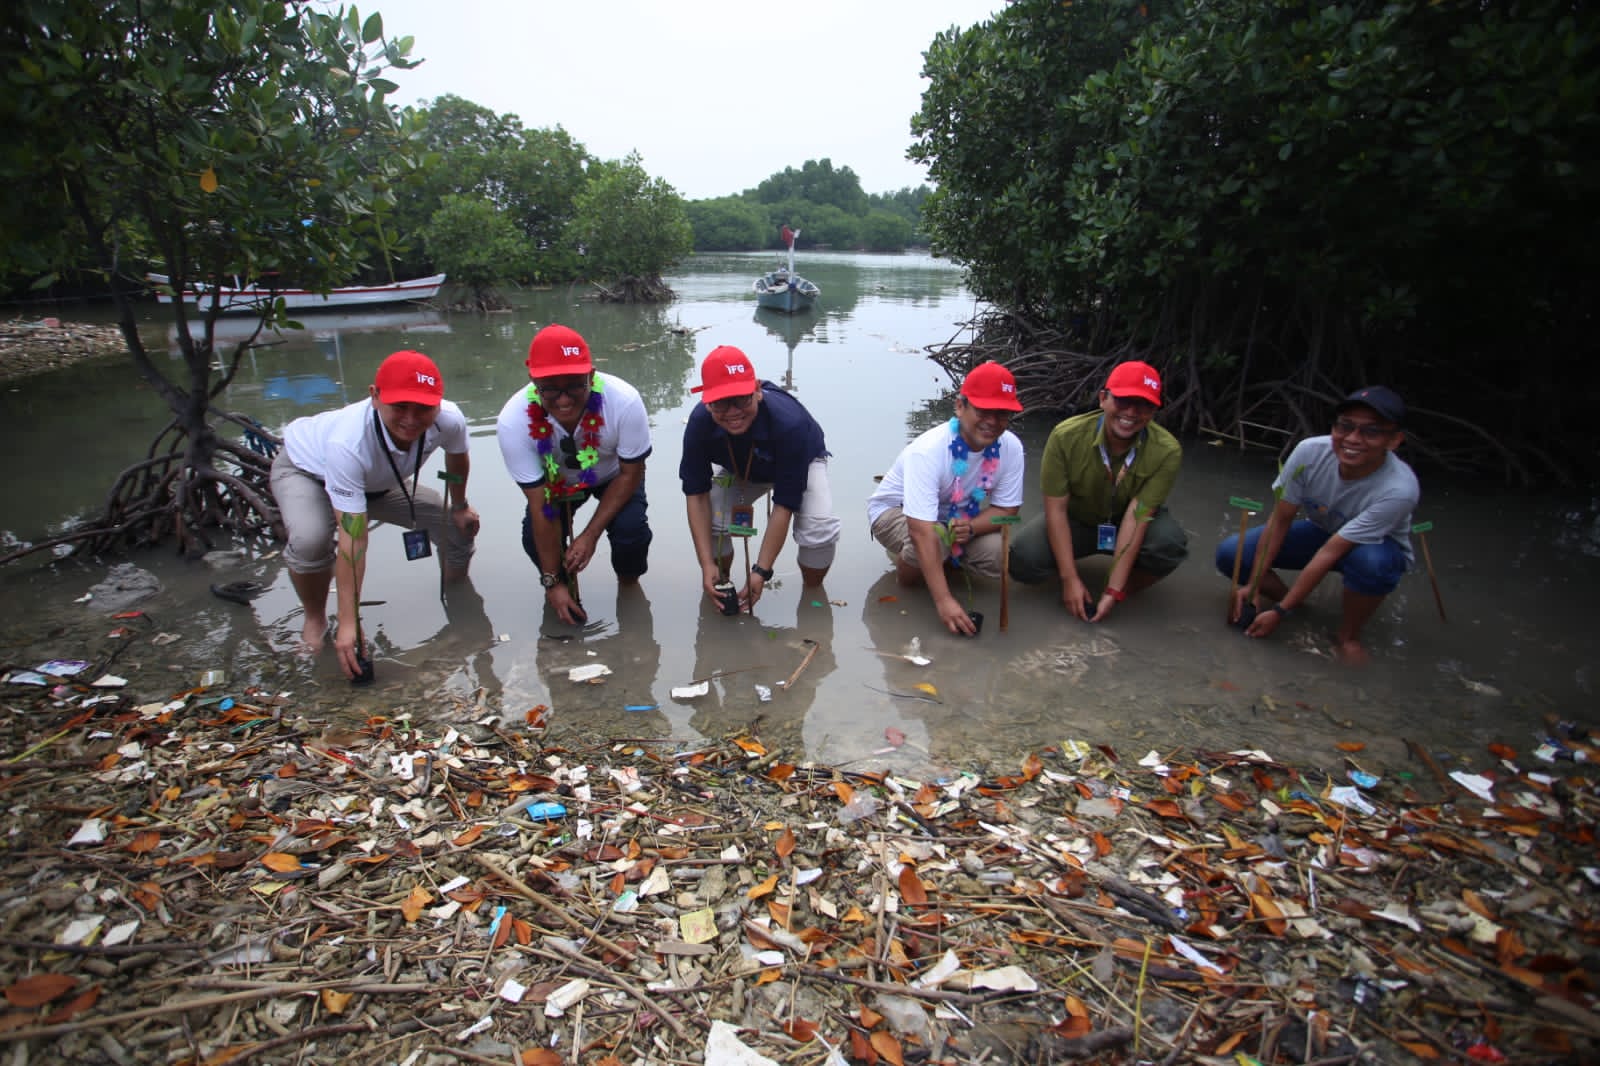 JMI - IFG Bantu Anak Nelayan dan Tanam Mangrove di Pulau Tunda